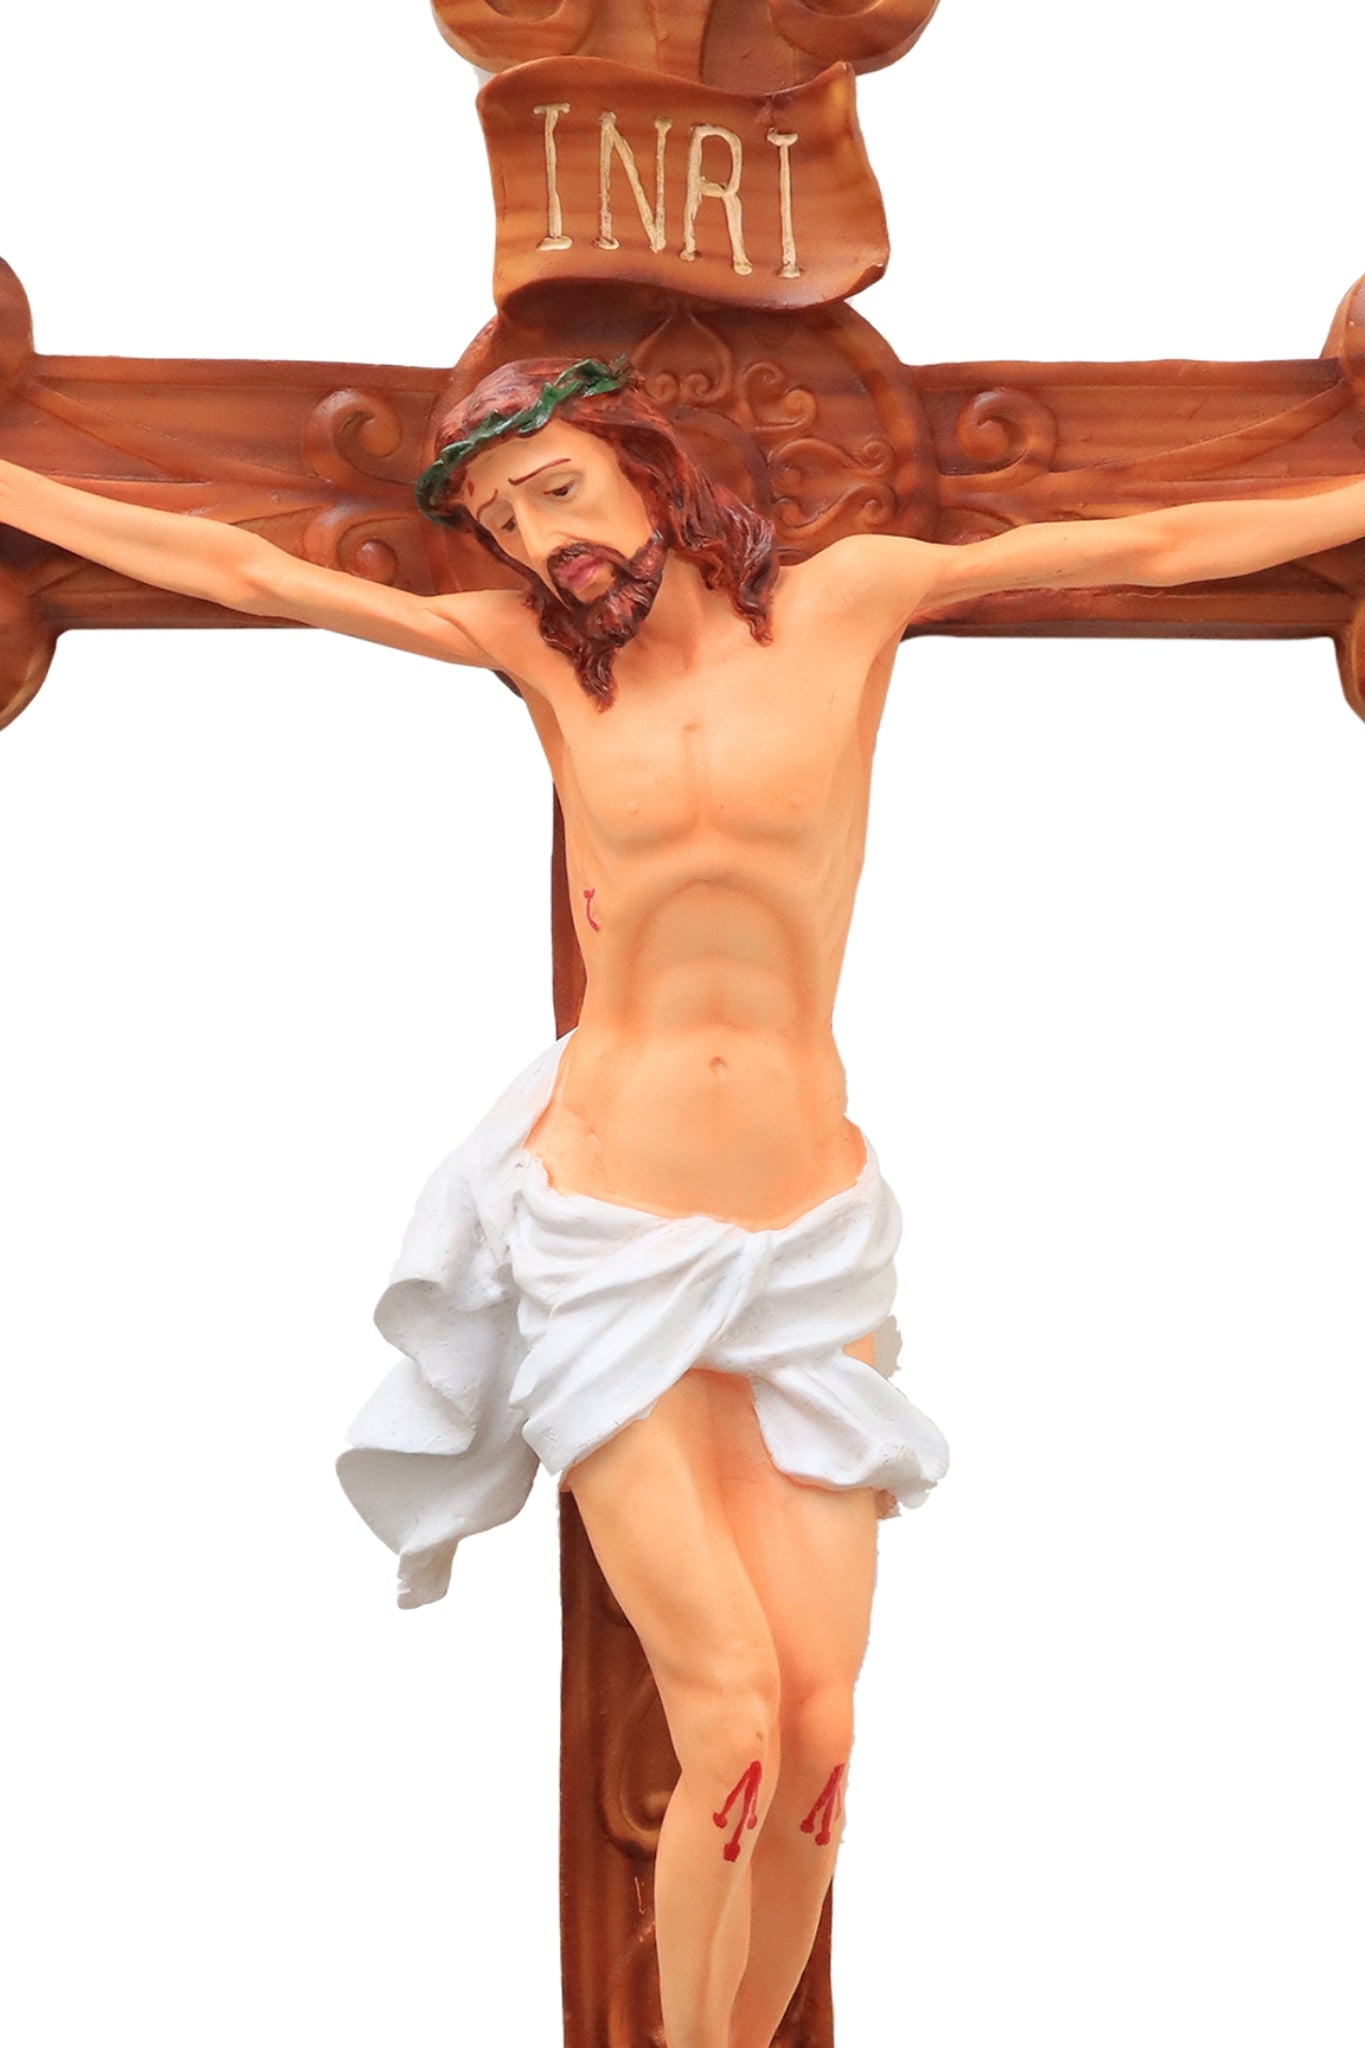 Crucifix 23 Inch Statue - Jesus on the Cross